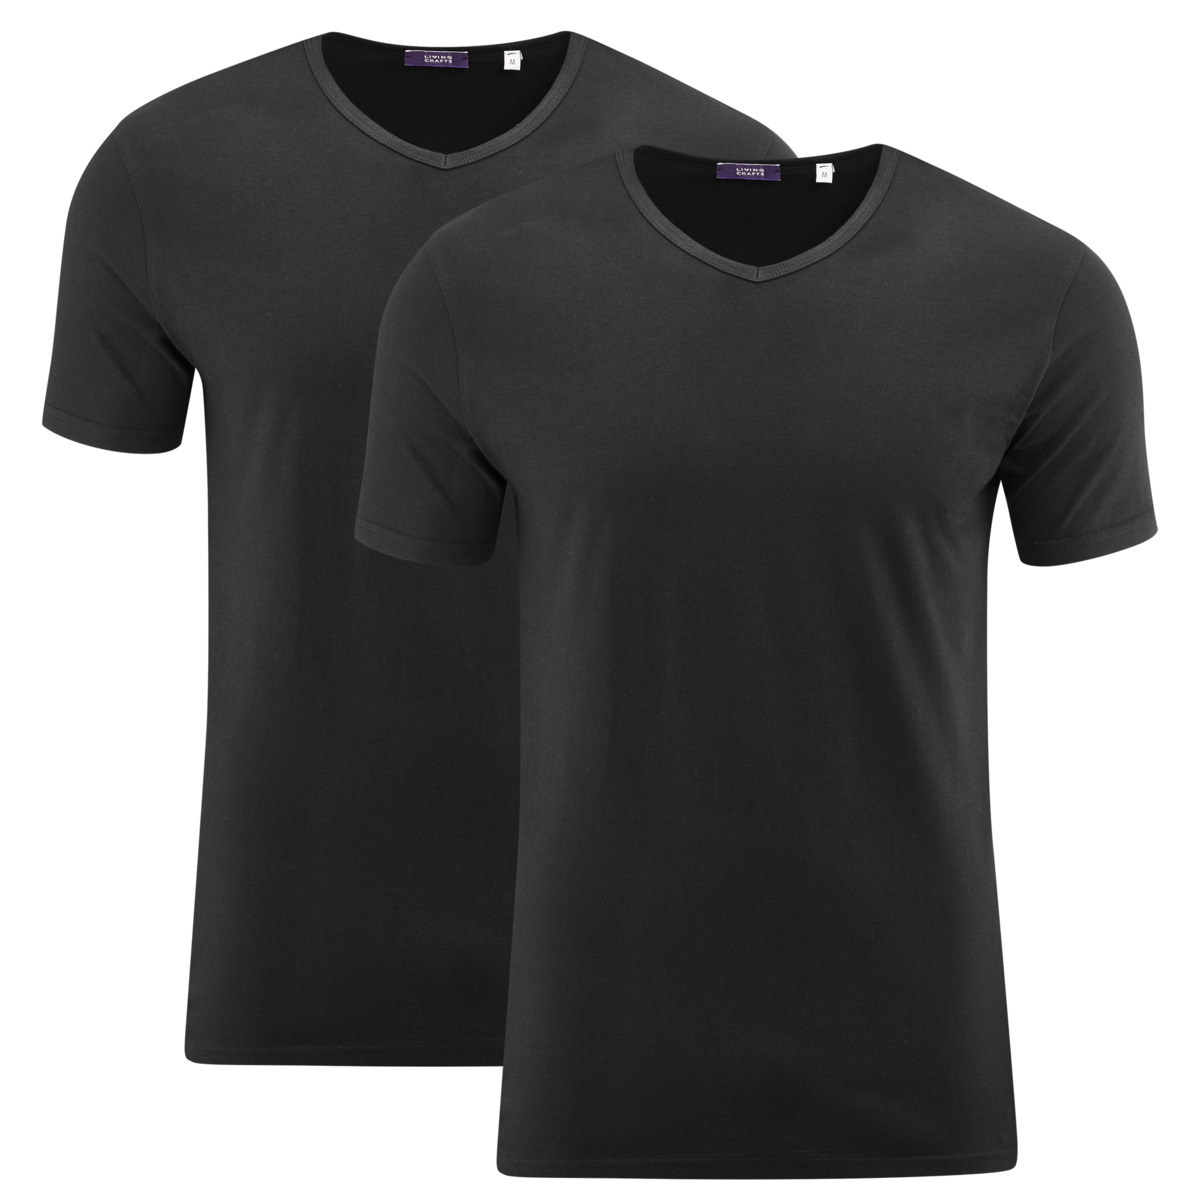 Black T-shirt, pack of 2, DEAN